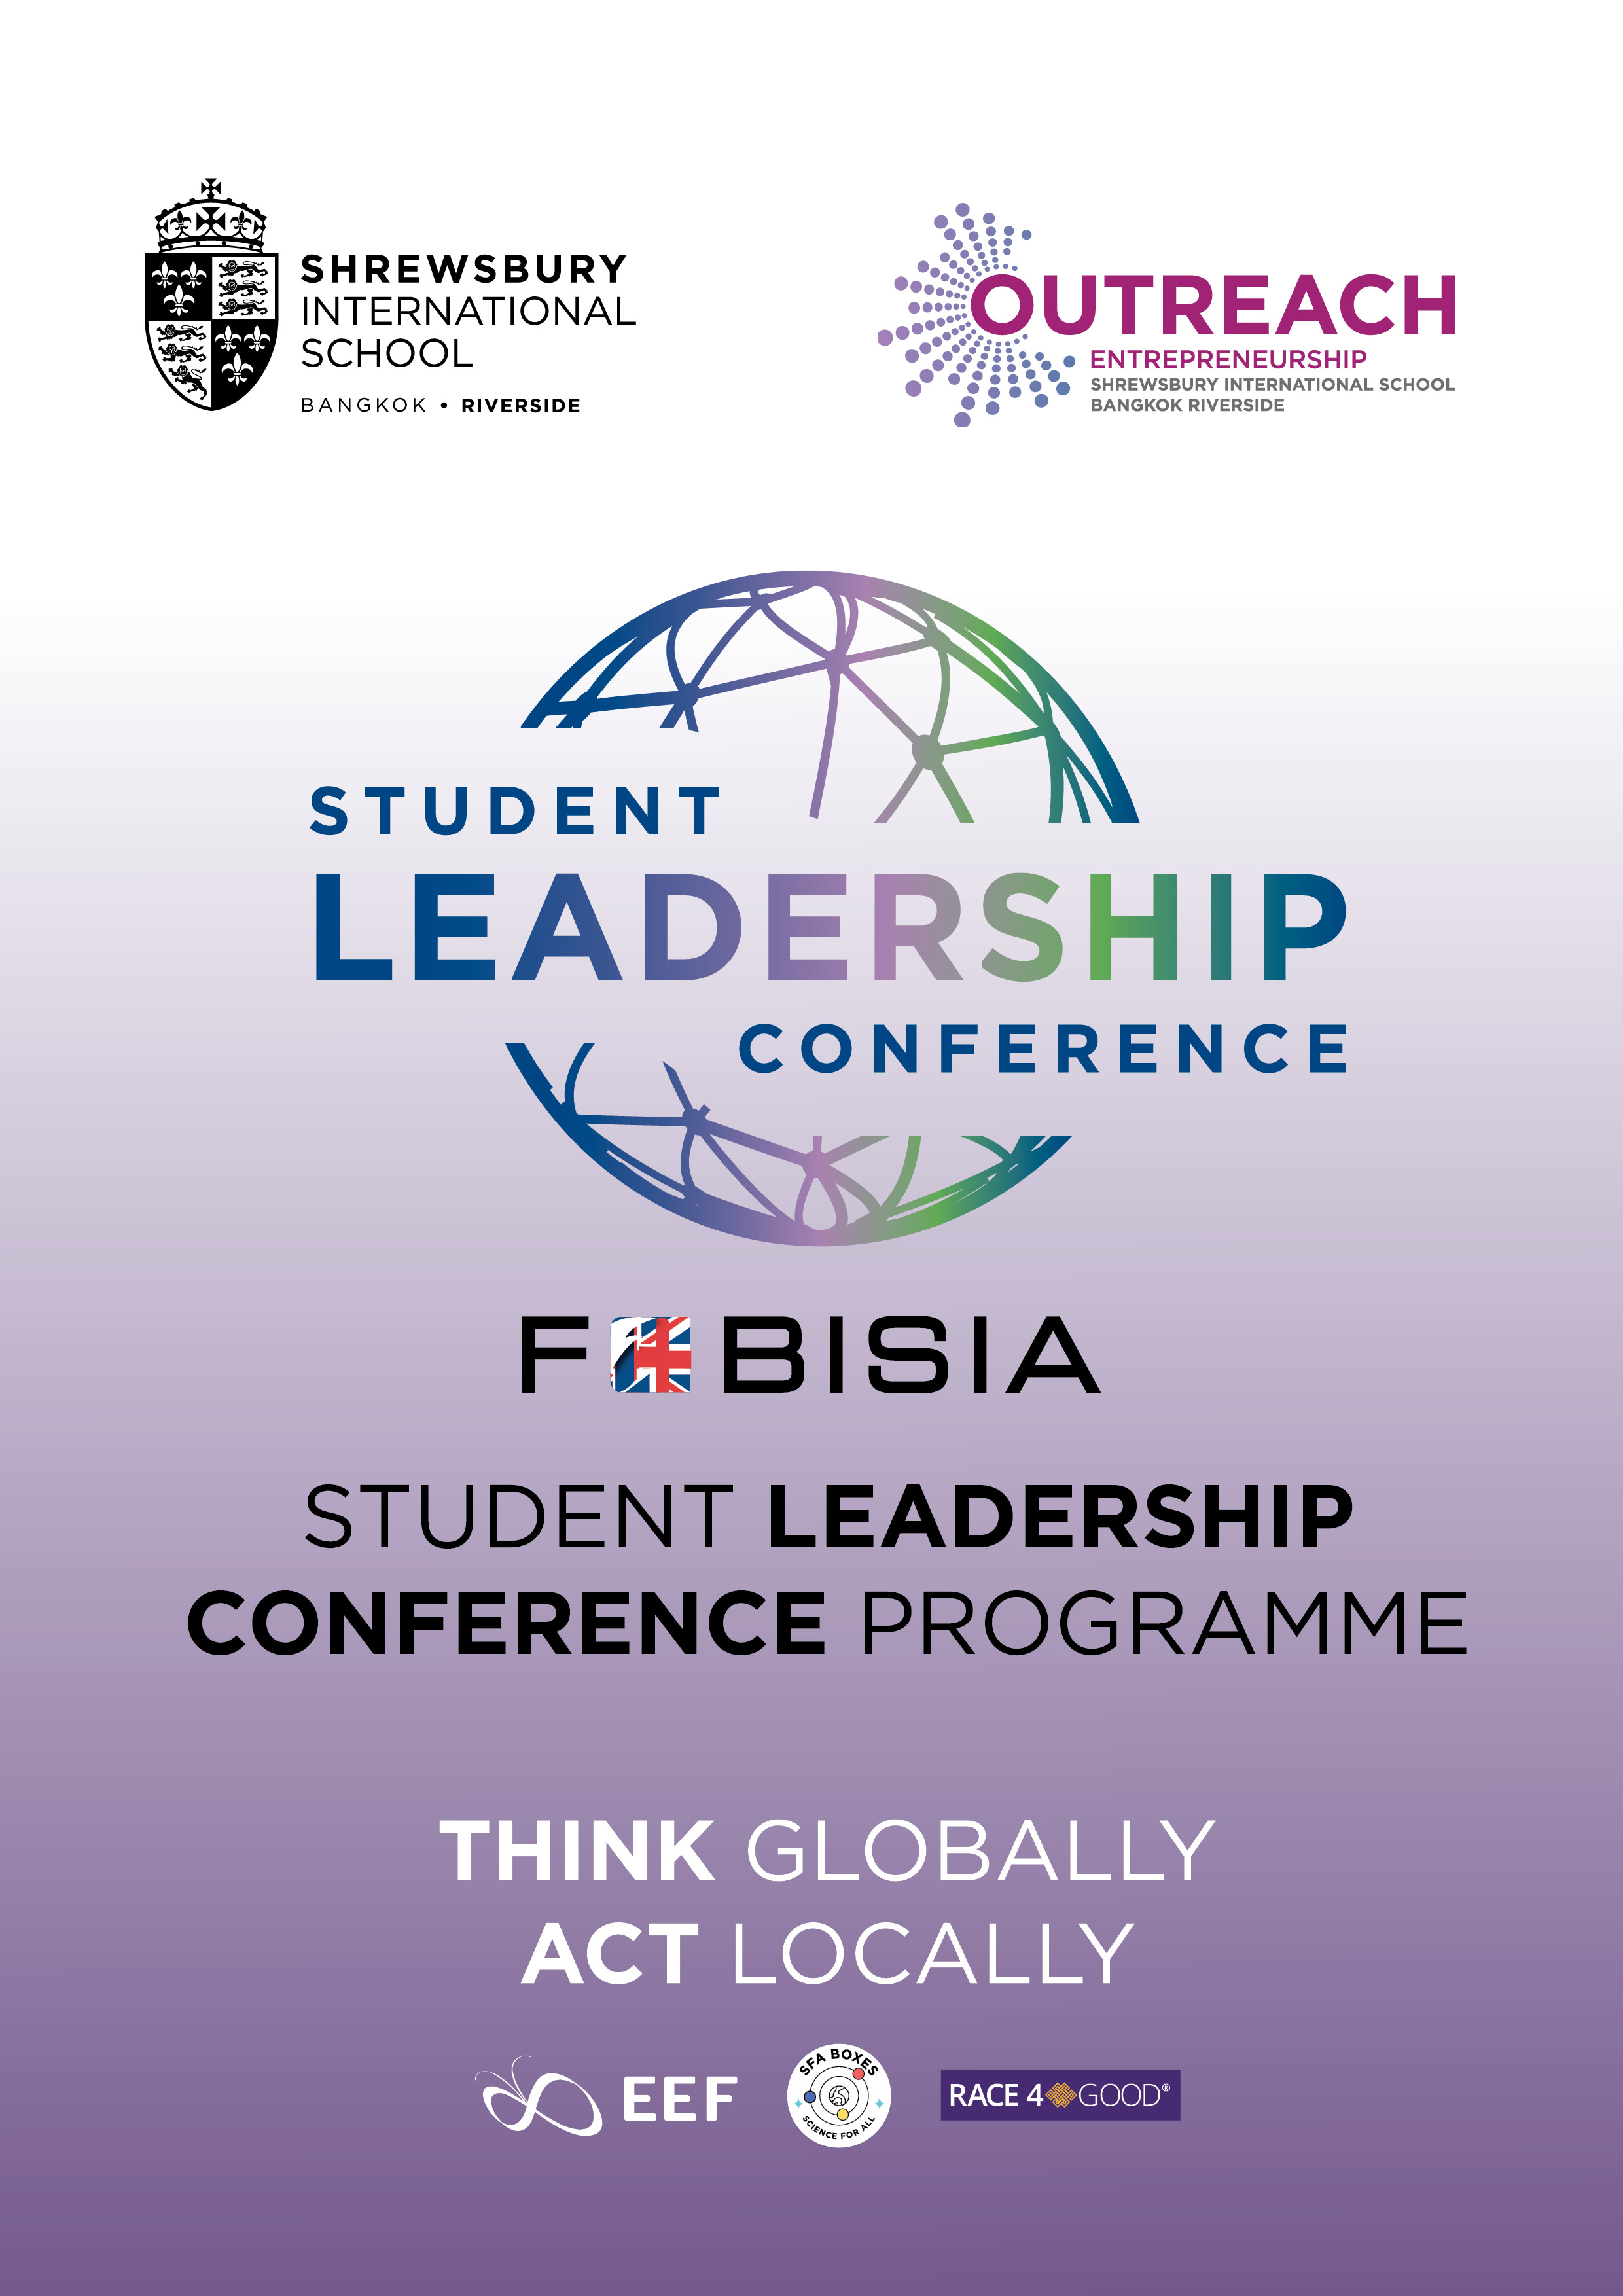 FOBISIA: Student Leadership Conference Programme